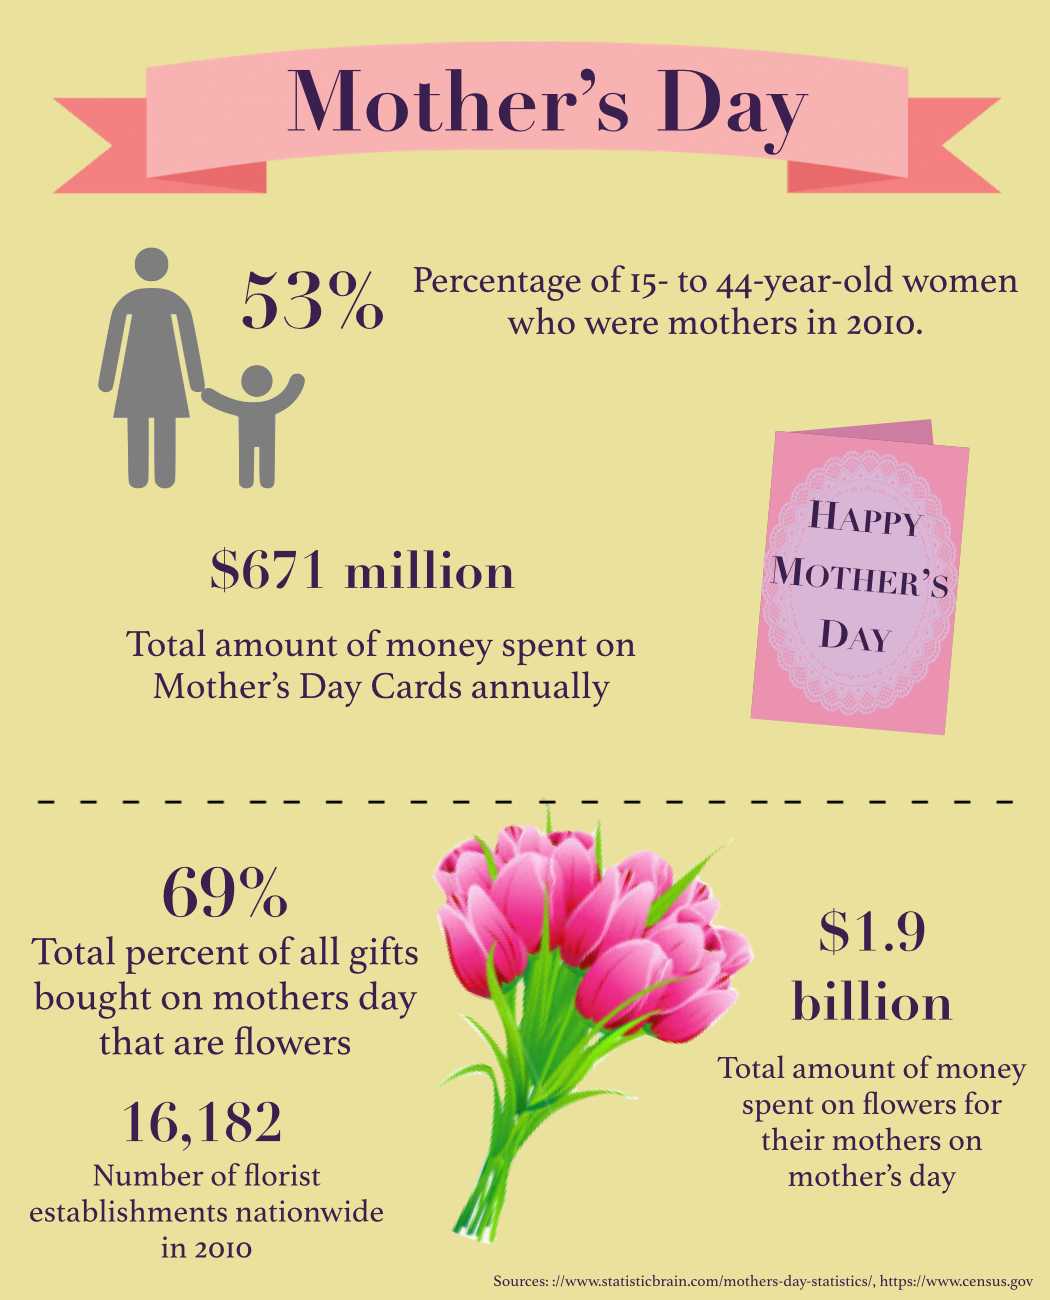 https://www.scotscoop.com/wp-content/uploads/2014/05/mothers-day.001.jpg